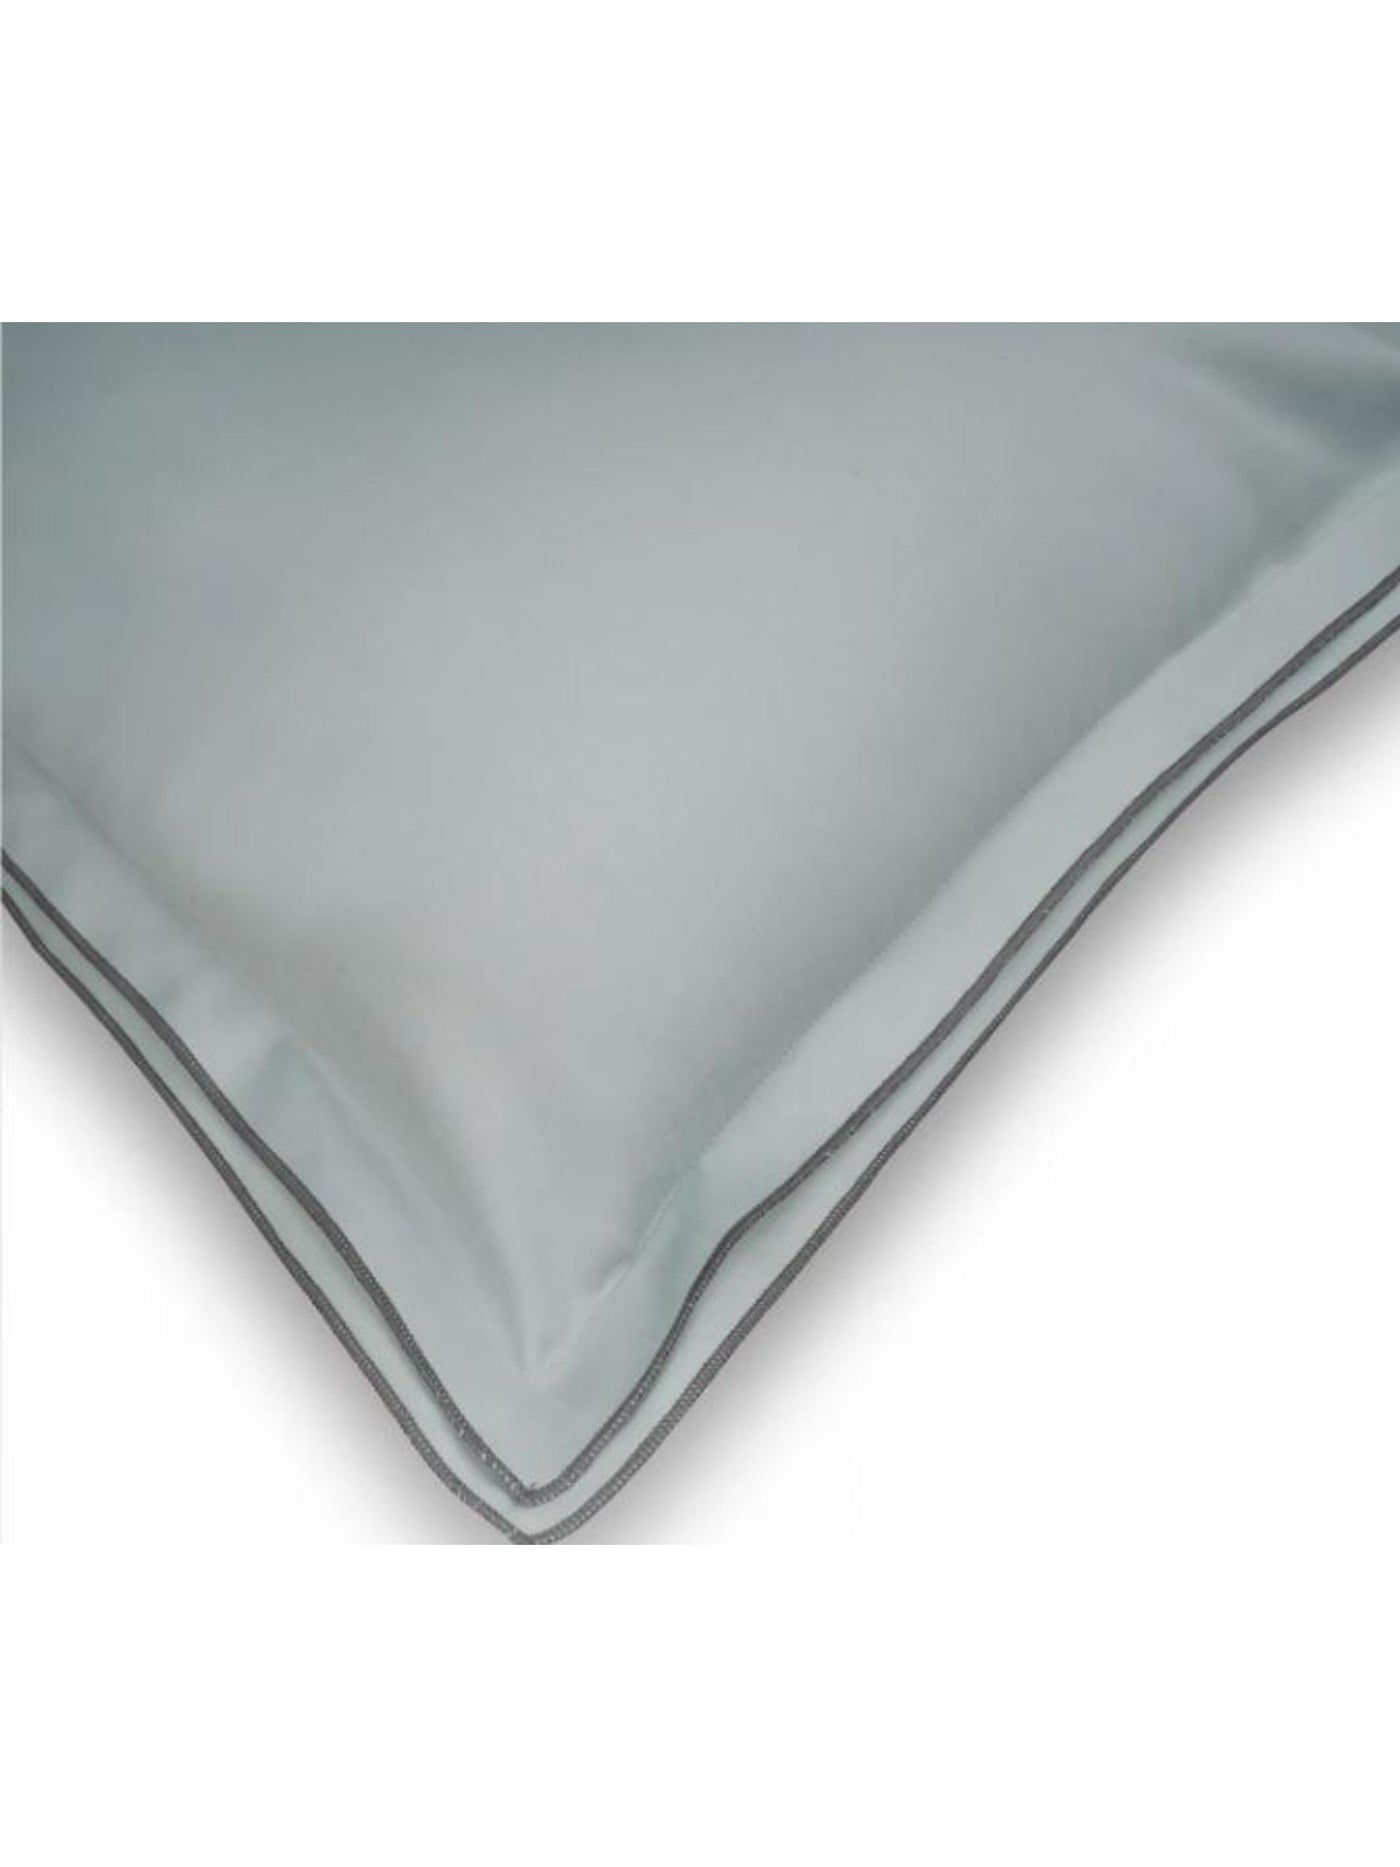 100% Cotton Bedsheet - Waves Set of 5